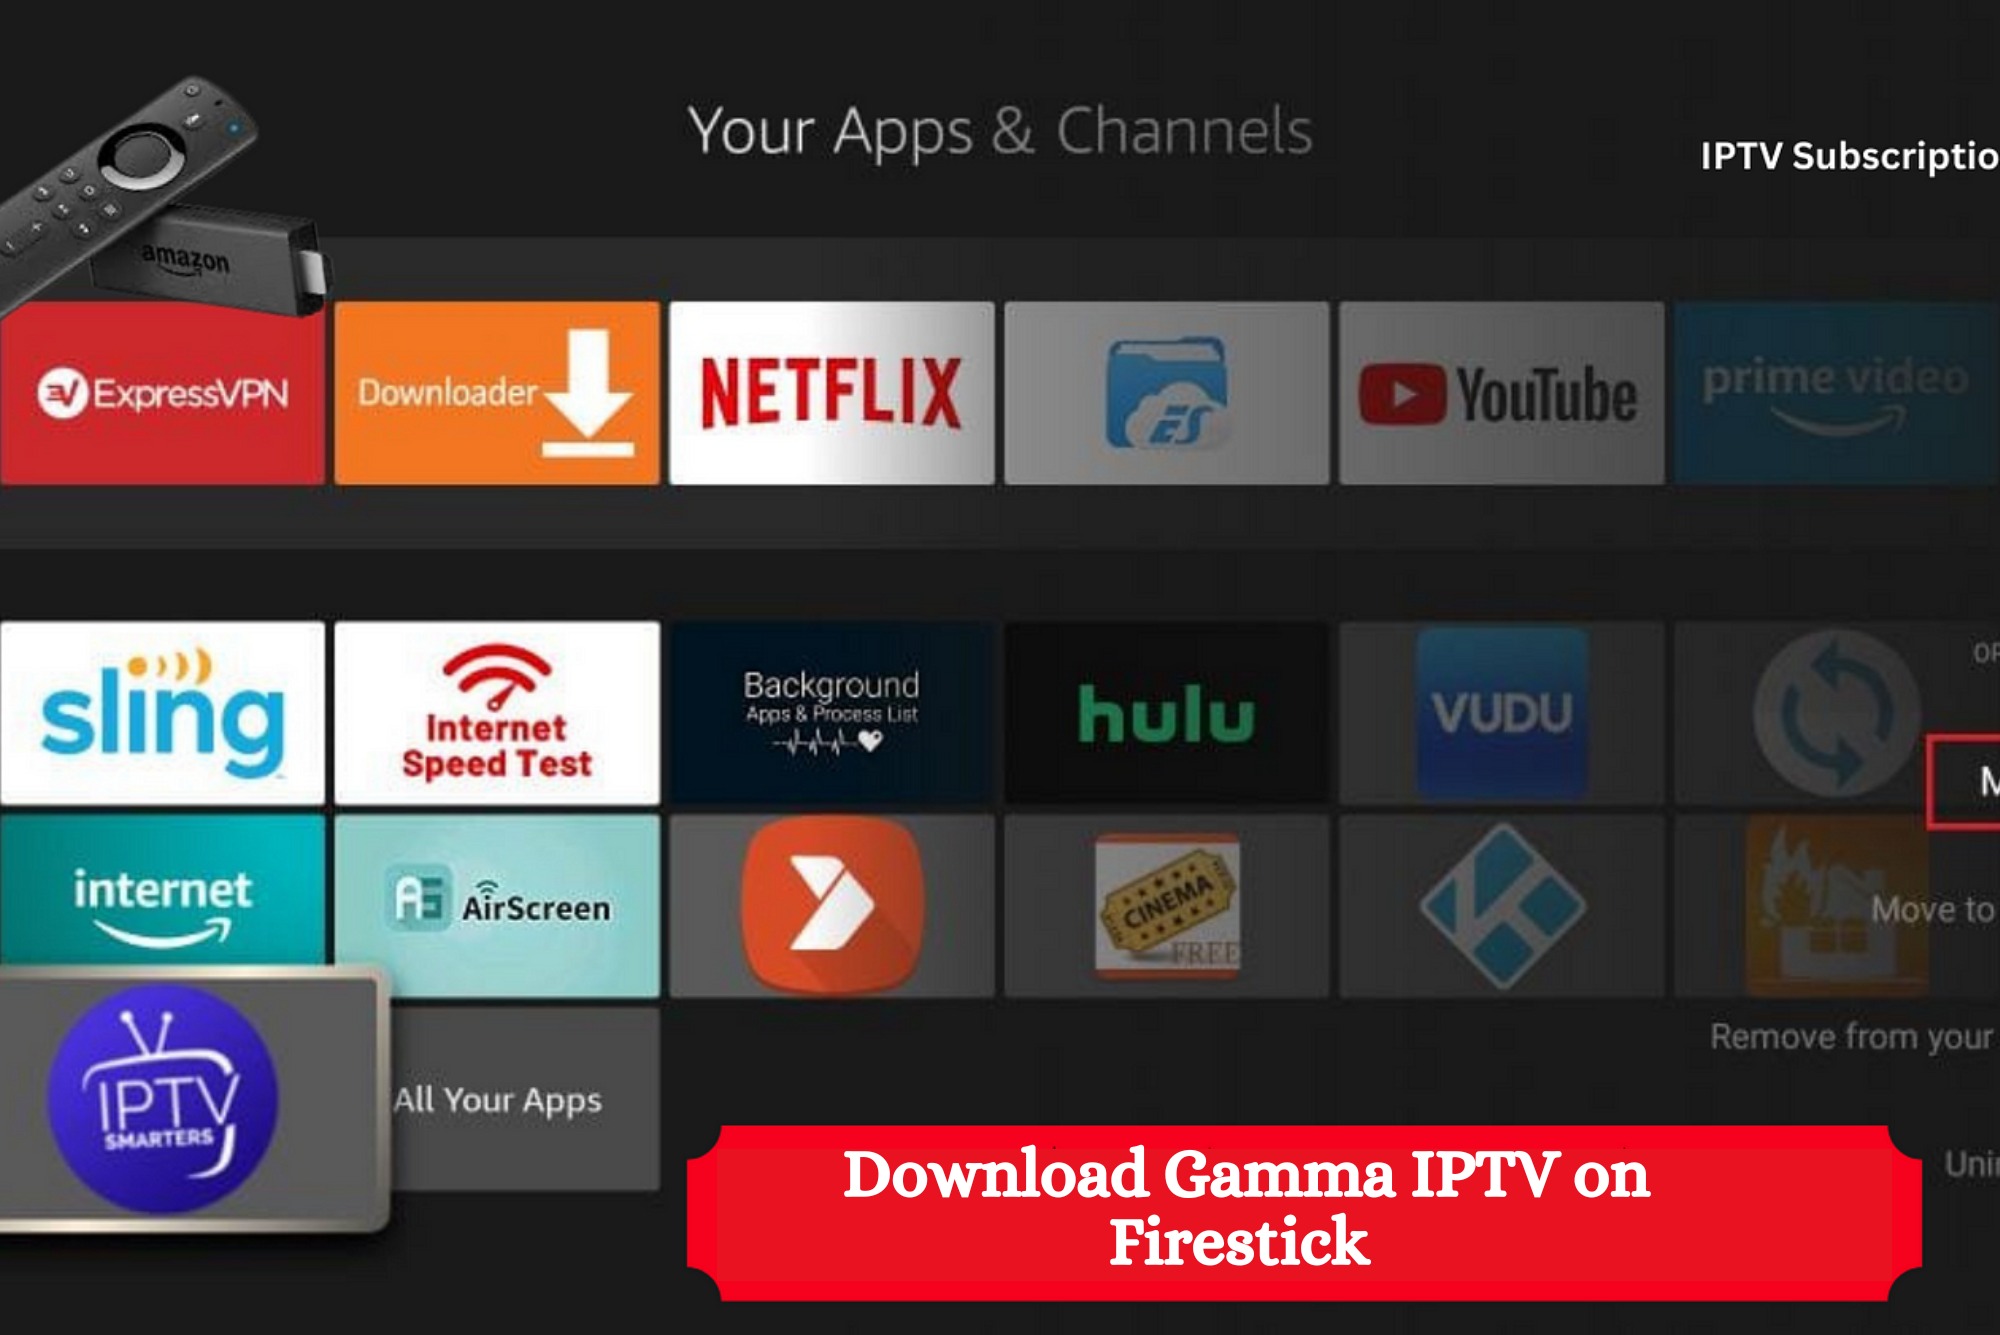 How to Download Gamma IPTV on Firestick